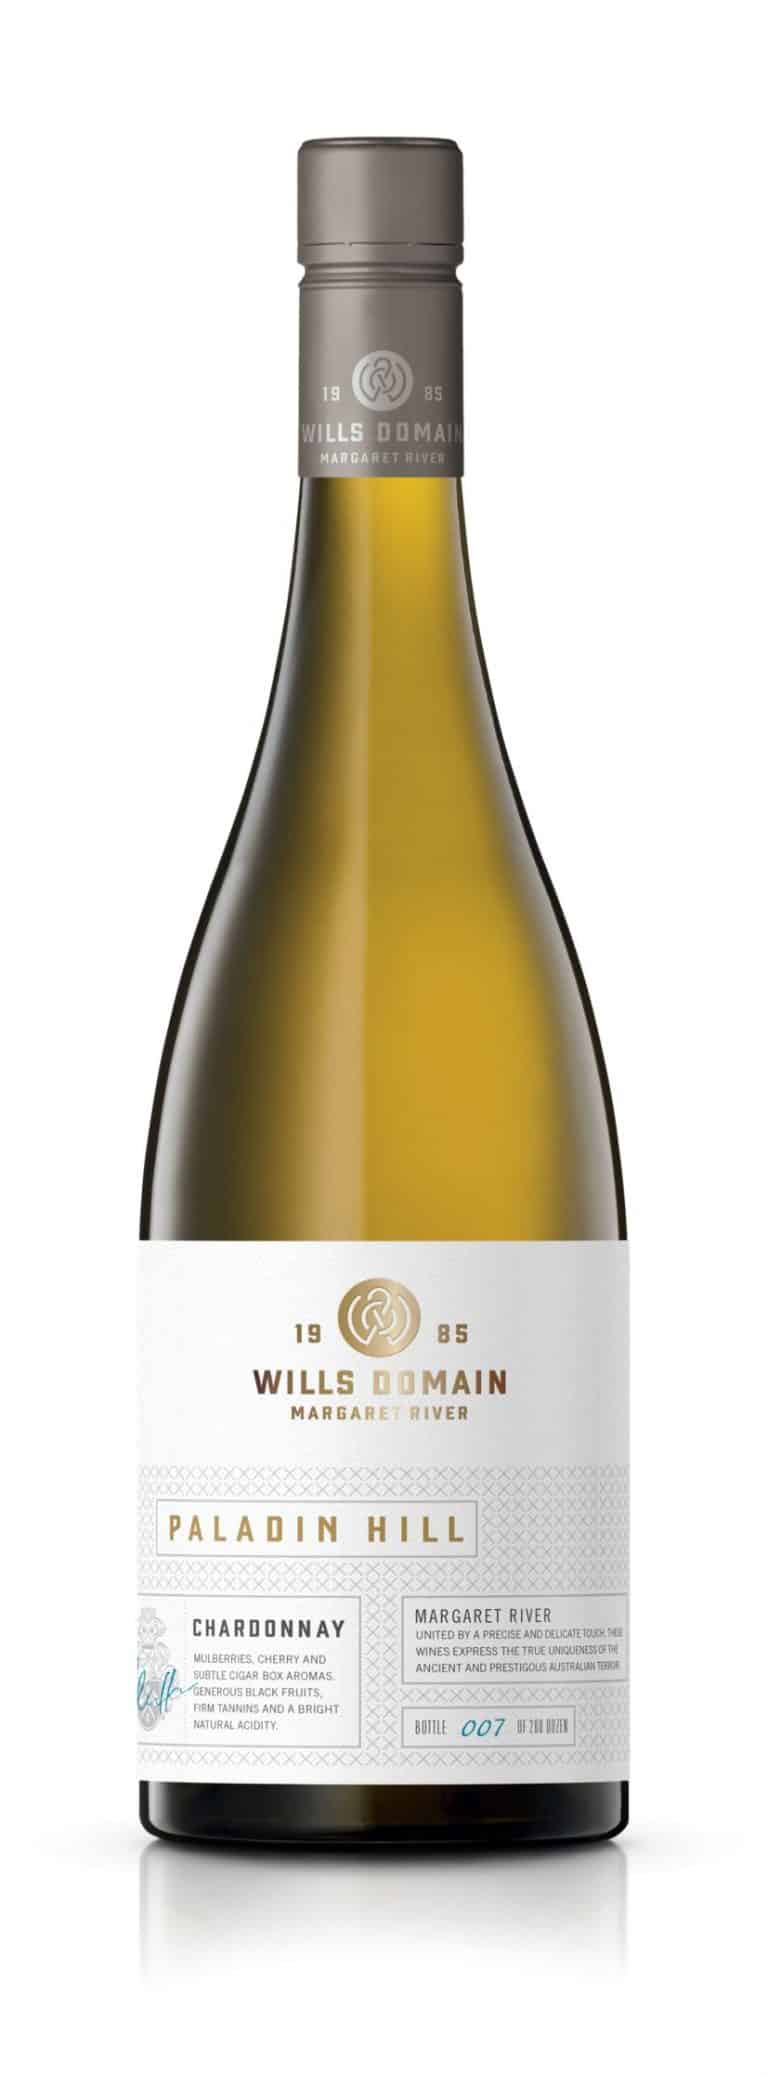 Wills Domain Paladin Hill Chardonnay